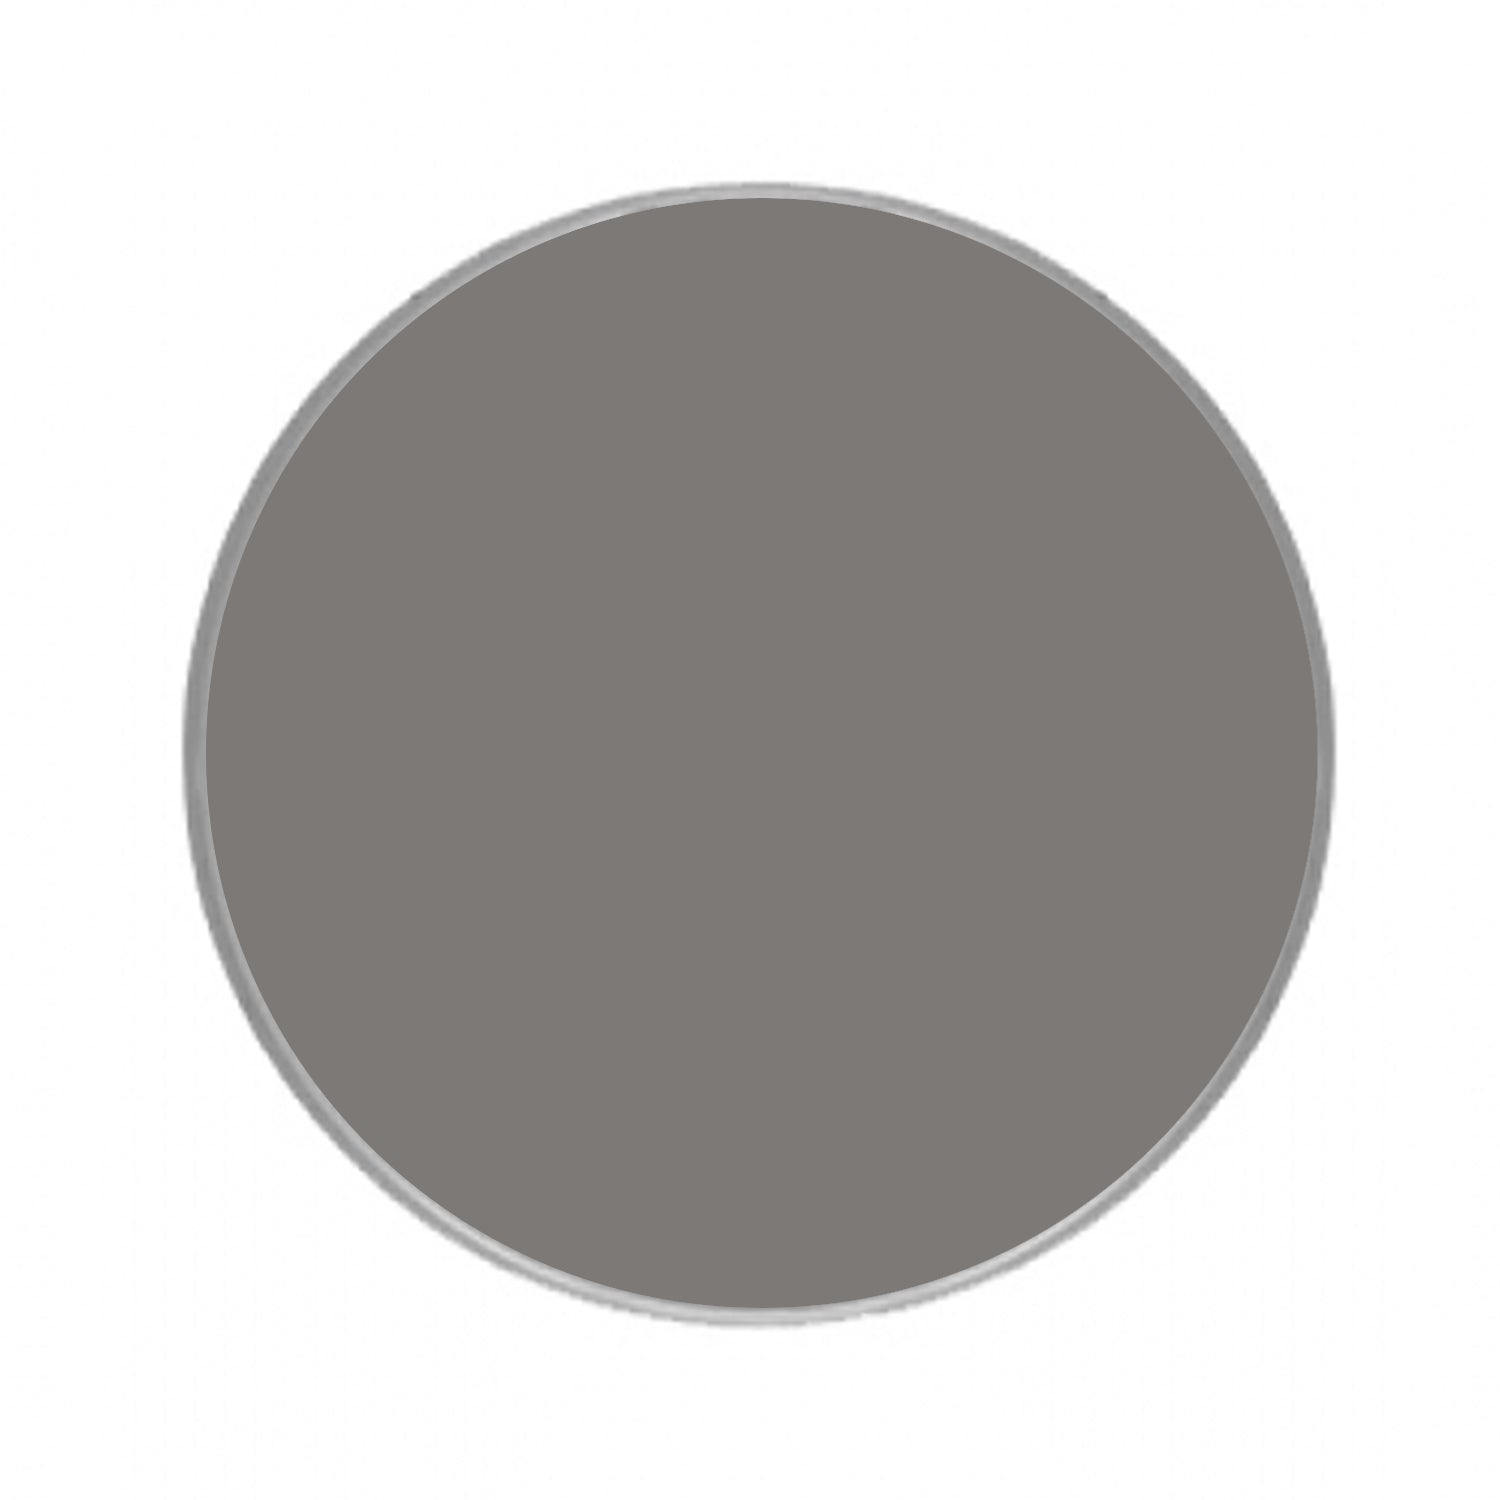 Kryolan Aquacolor Gray Face Paint Refills #089 (4 ml)